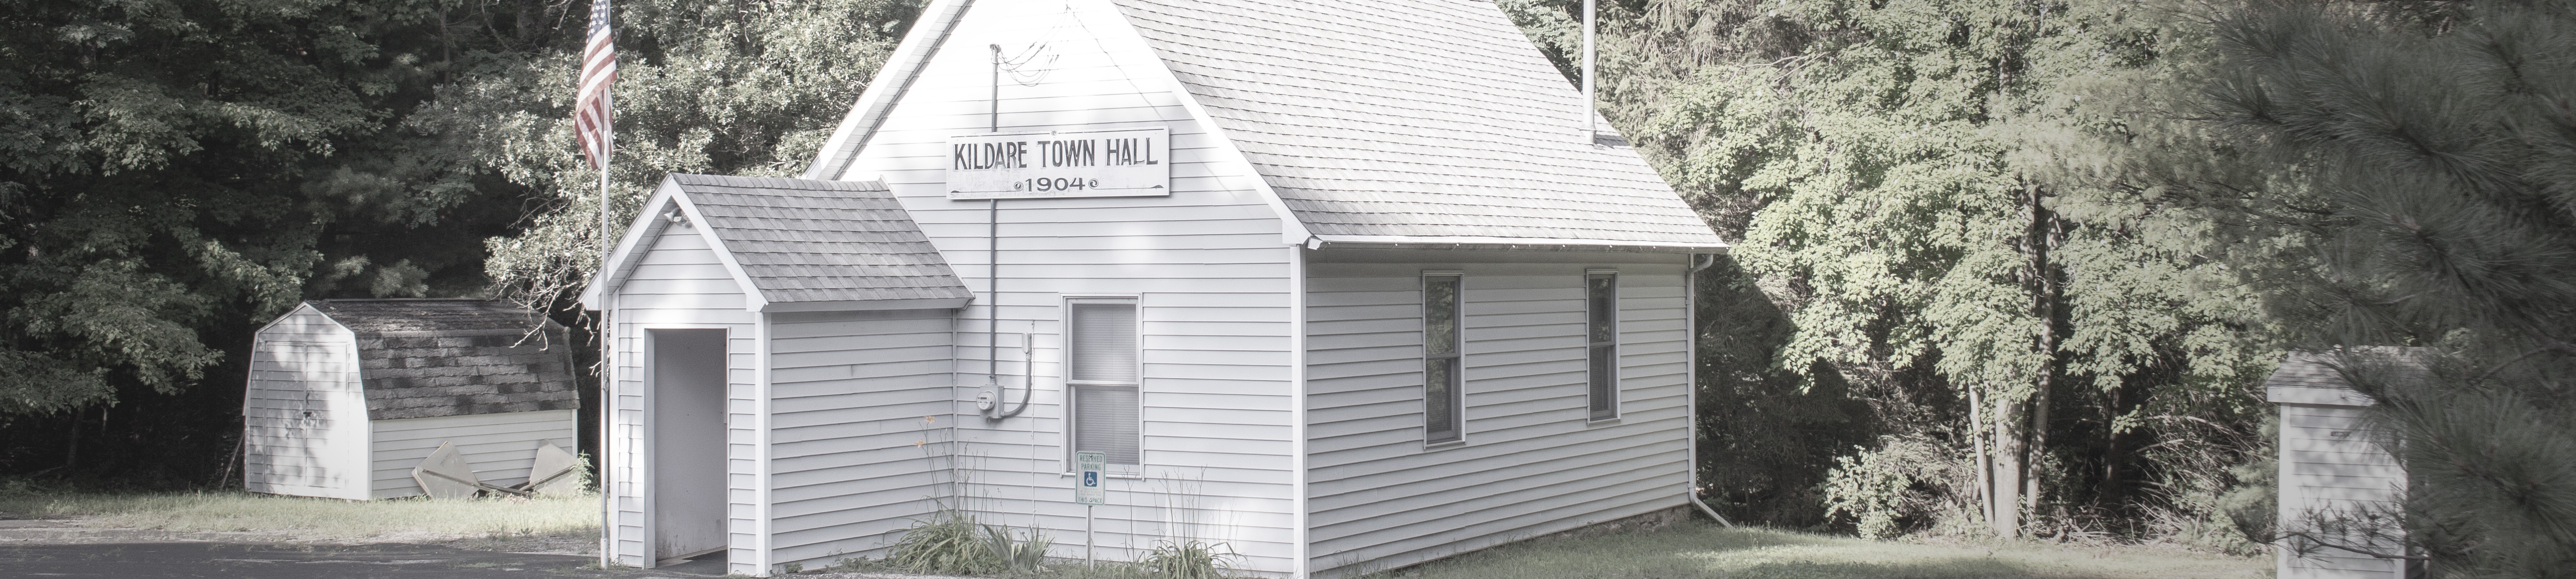 kildare town hall